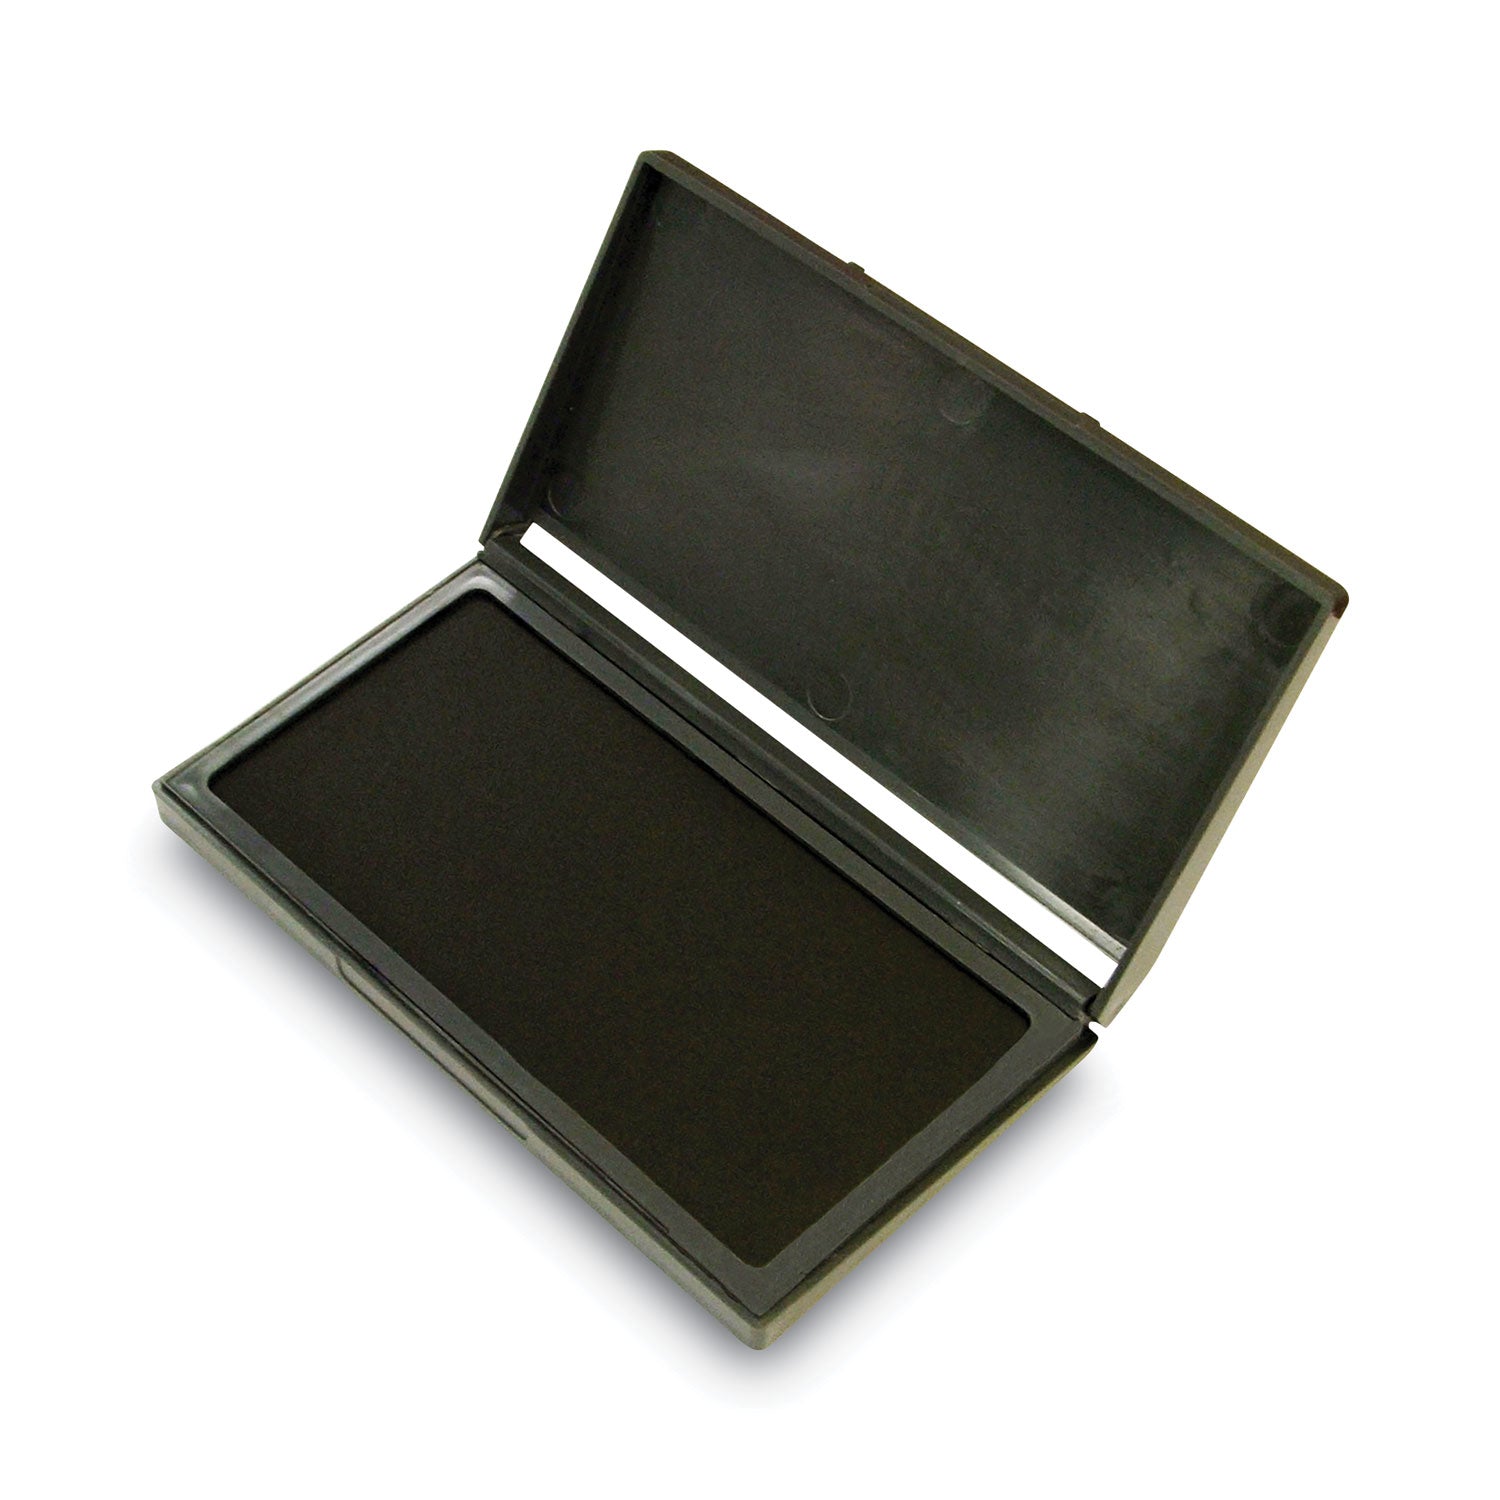 Microgel Stamp Pad for 2000 PLUS, 6.17" x 3.13", Black - 